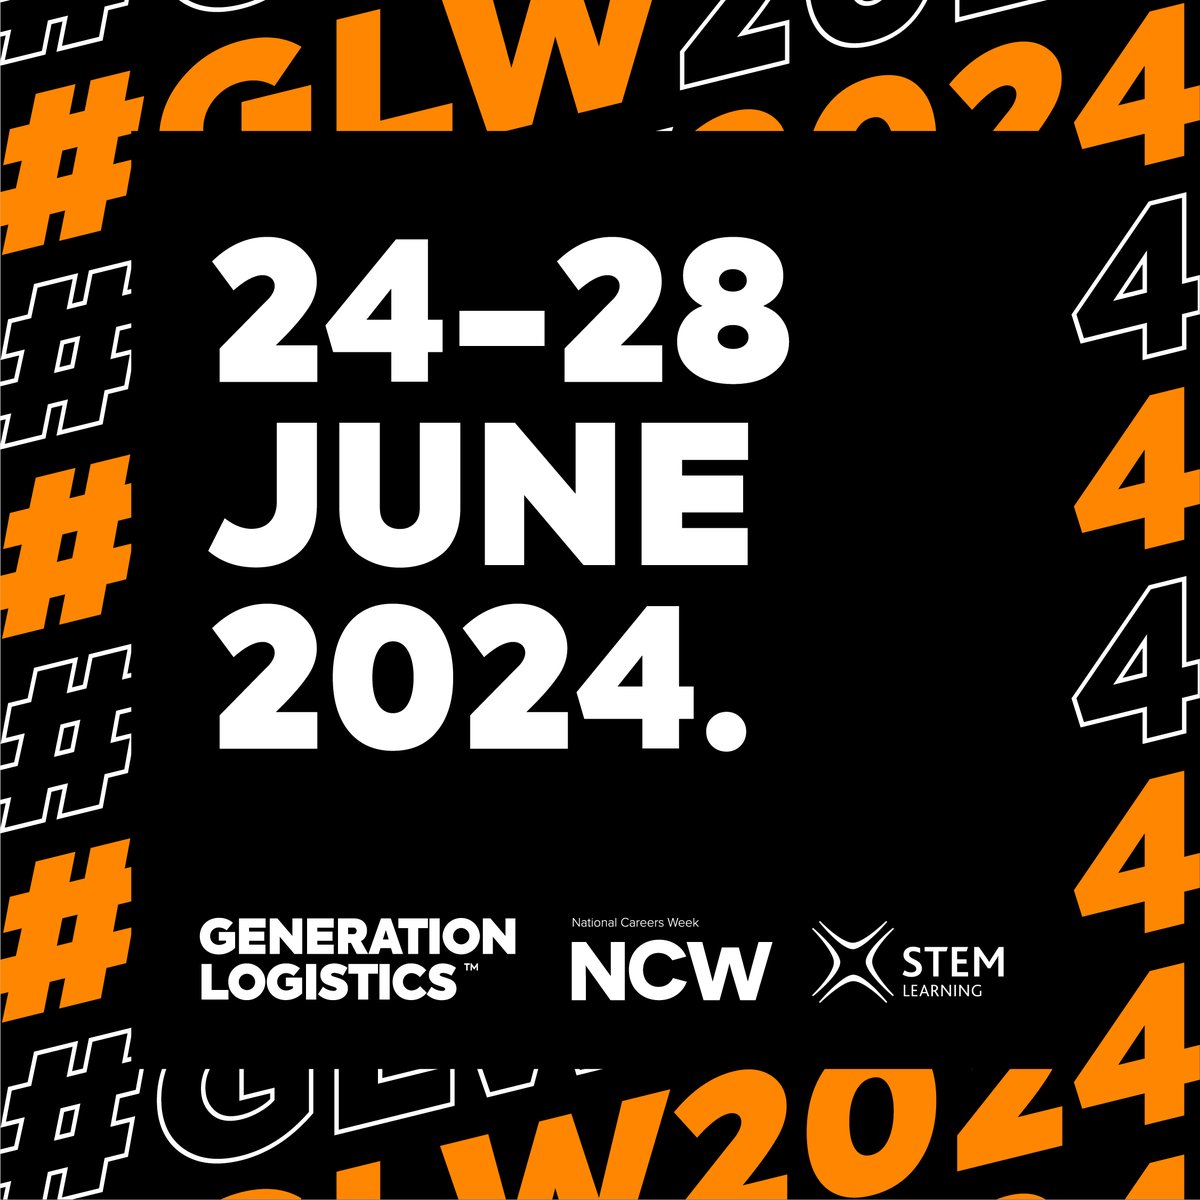 𝙂𝙀𝙉𝙀𝙍𝘼𝙏𝙄𝙊𝙉 𝙇𝙊𝙂𝙄𝙎𝙏𝙄𝘾𝙎 𝙒𝙀𝙀𝙆    
🗓️24th - 28th June.    
Official hashtag #GLW2024   
Socials 🤳
glw2024.co.uk
Case Studies 📑
generationlogistics.org/case-studies/ 
FREE Resources 📚educationhub.generationlogistics.org/resources/

@Gen_Logistics